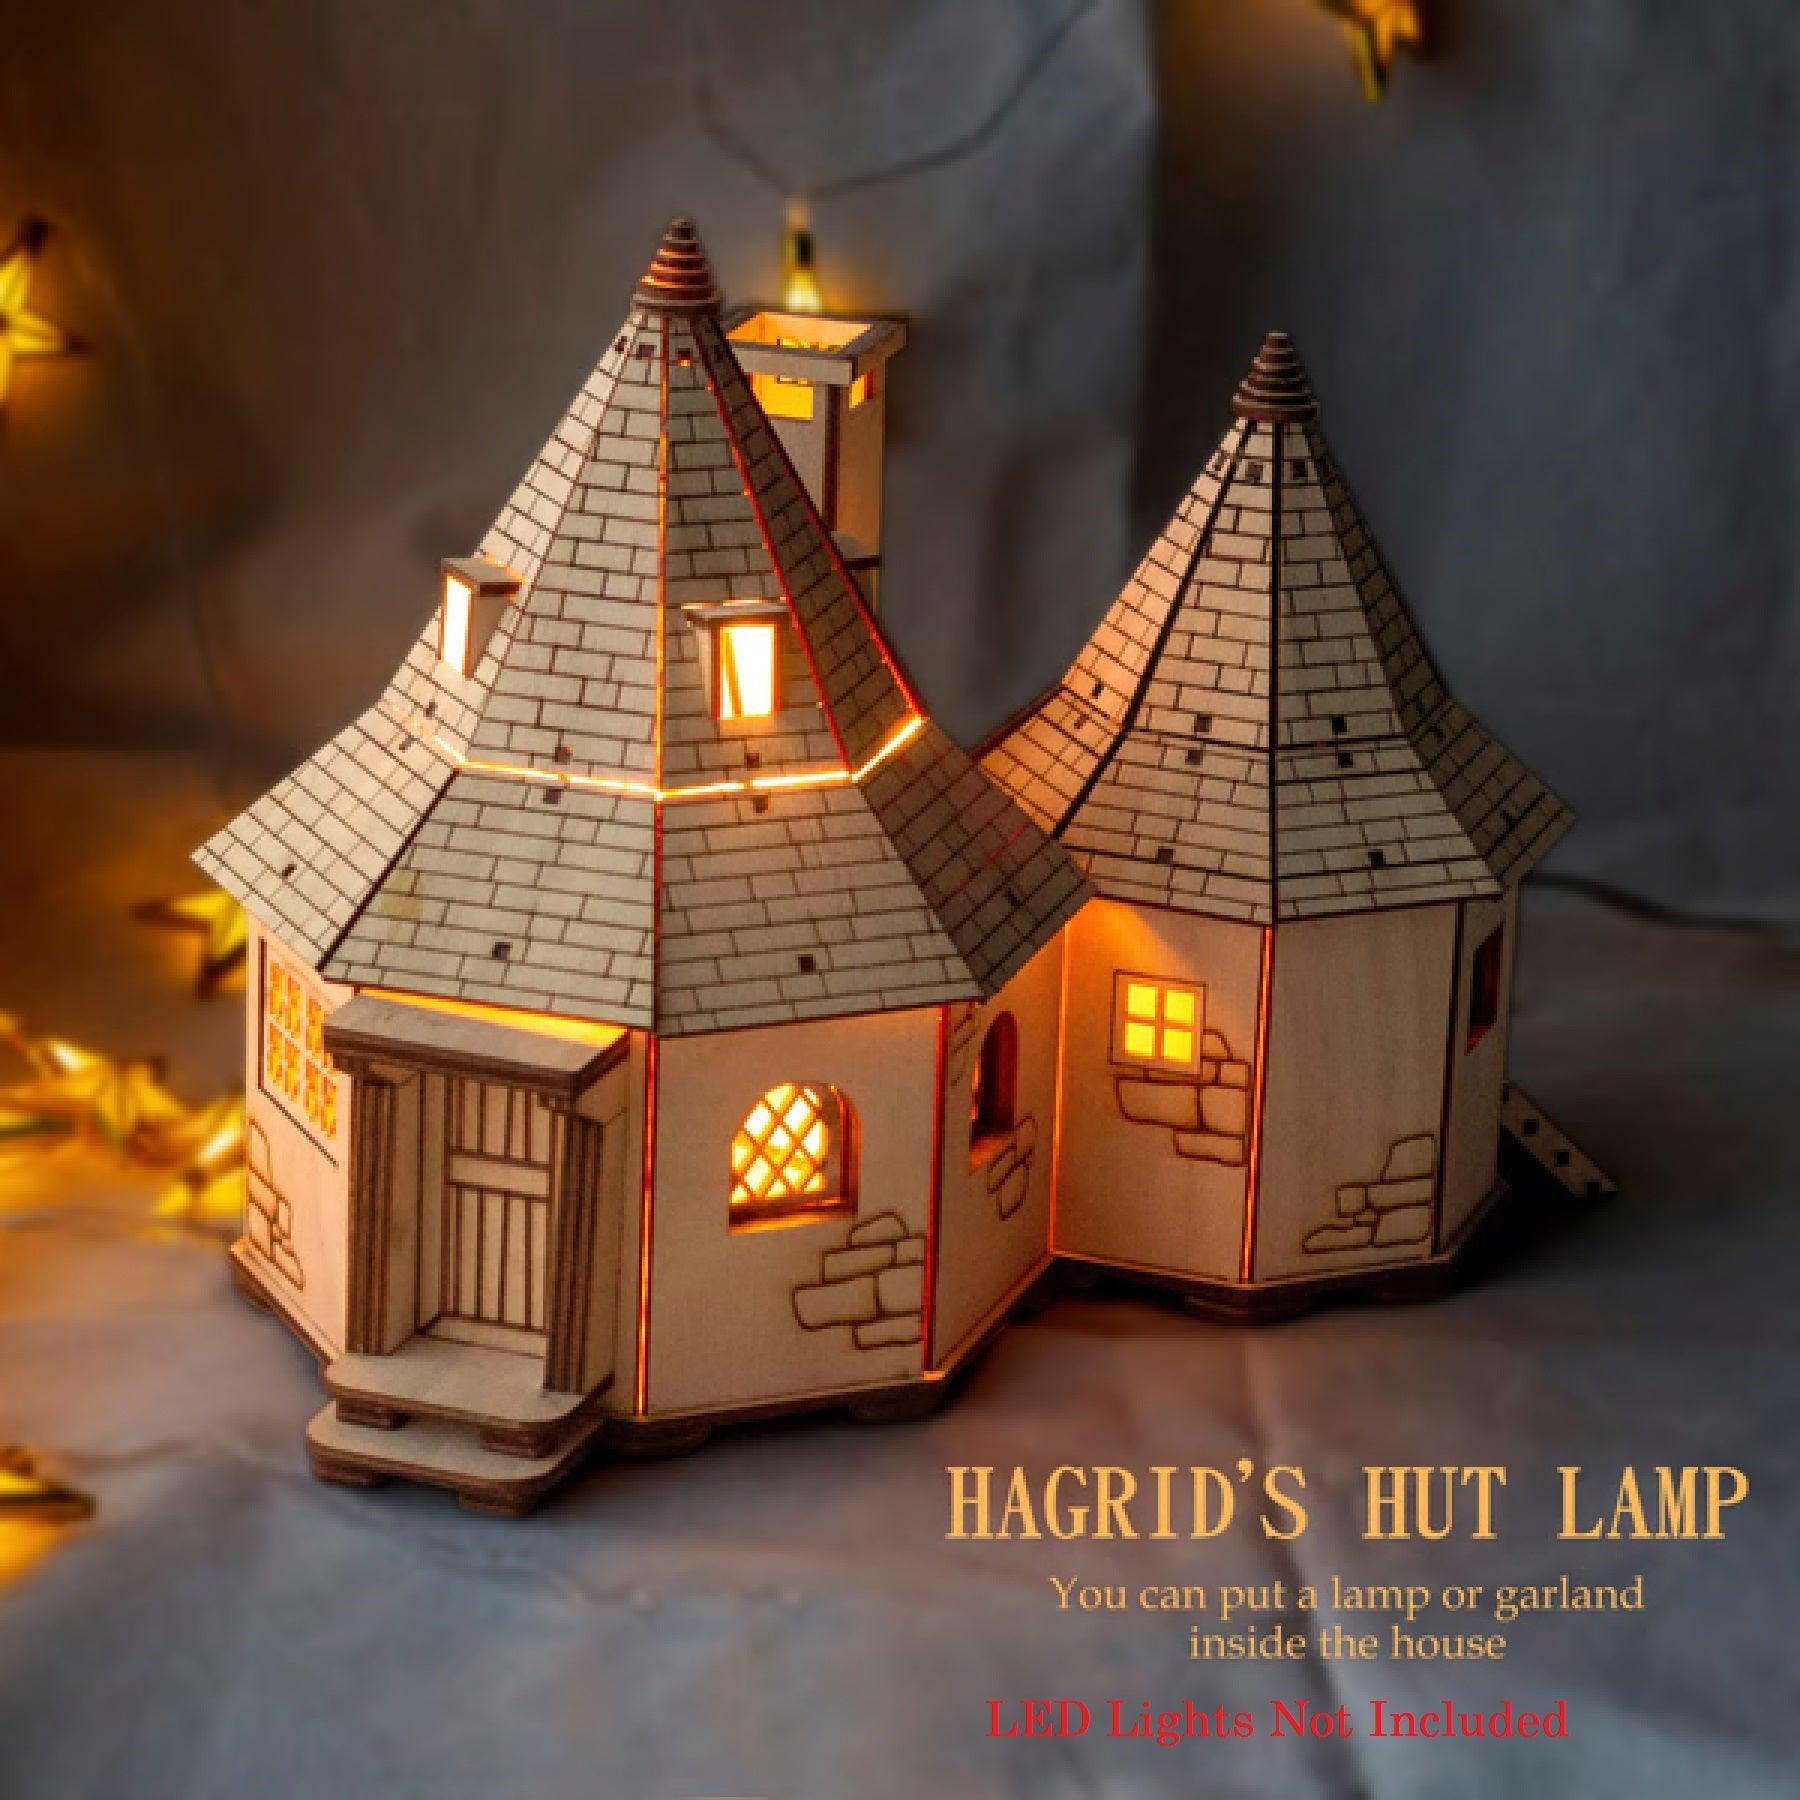 DIY Dollhouse Kit Wooden Miniature Diagon Alley Shops Hagrid's Hut Miniature Magical World Miniatures - Rajbharti Crafts